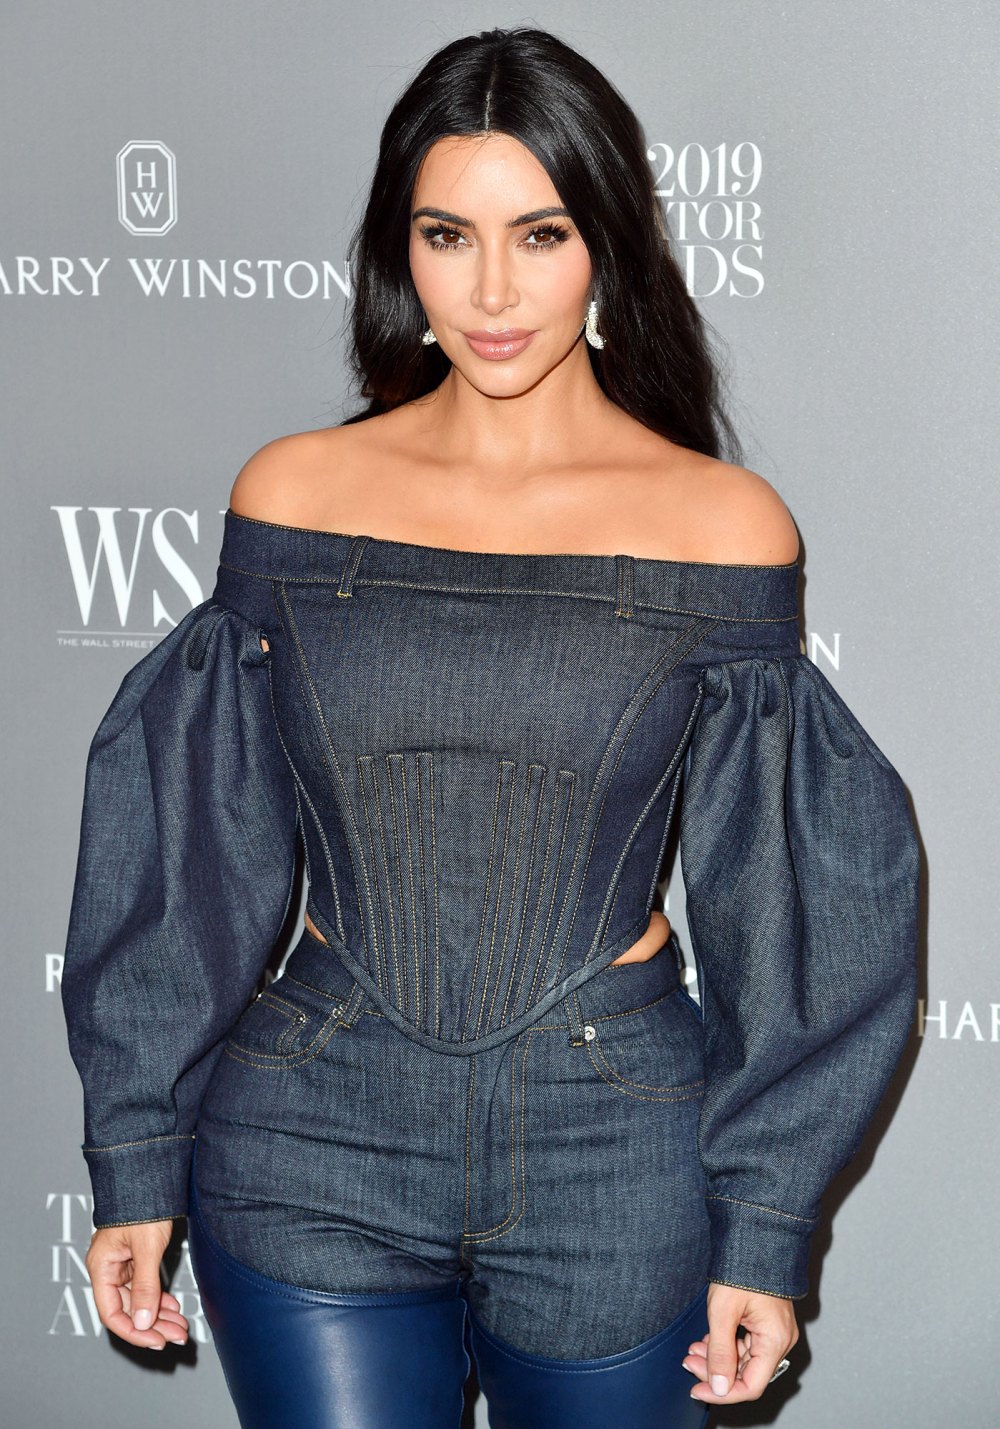 Kim Kardashian Enjoys Family Time Ahead of Her 40th Birthday